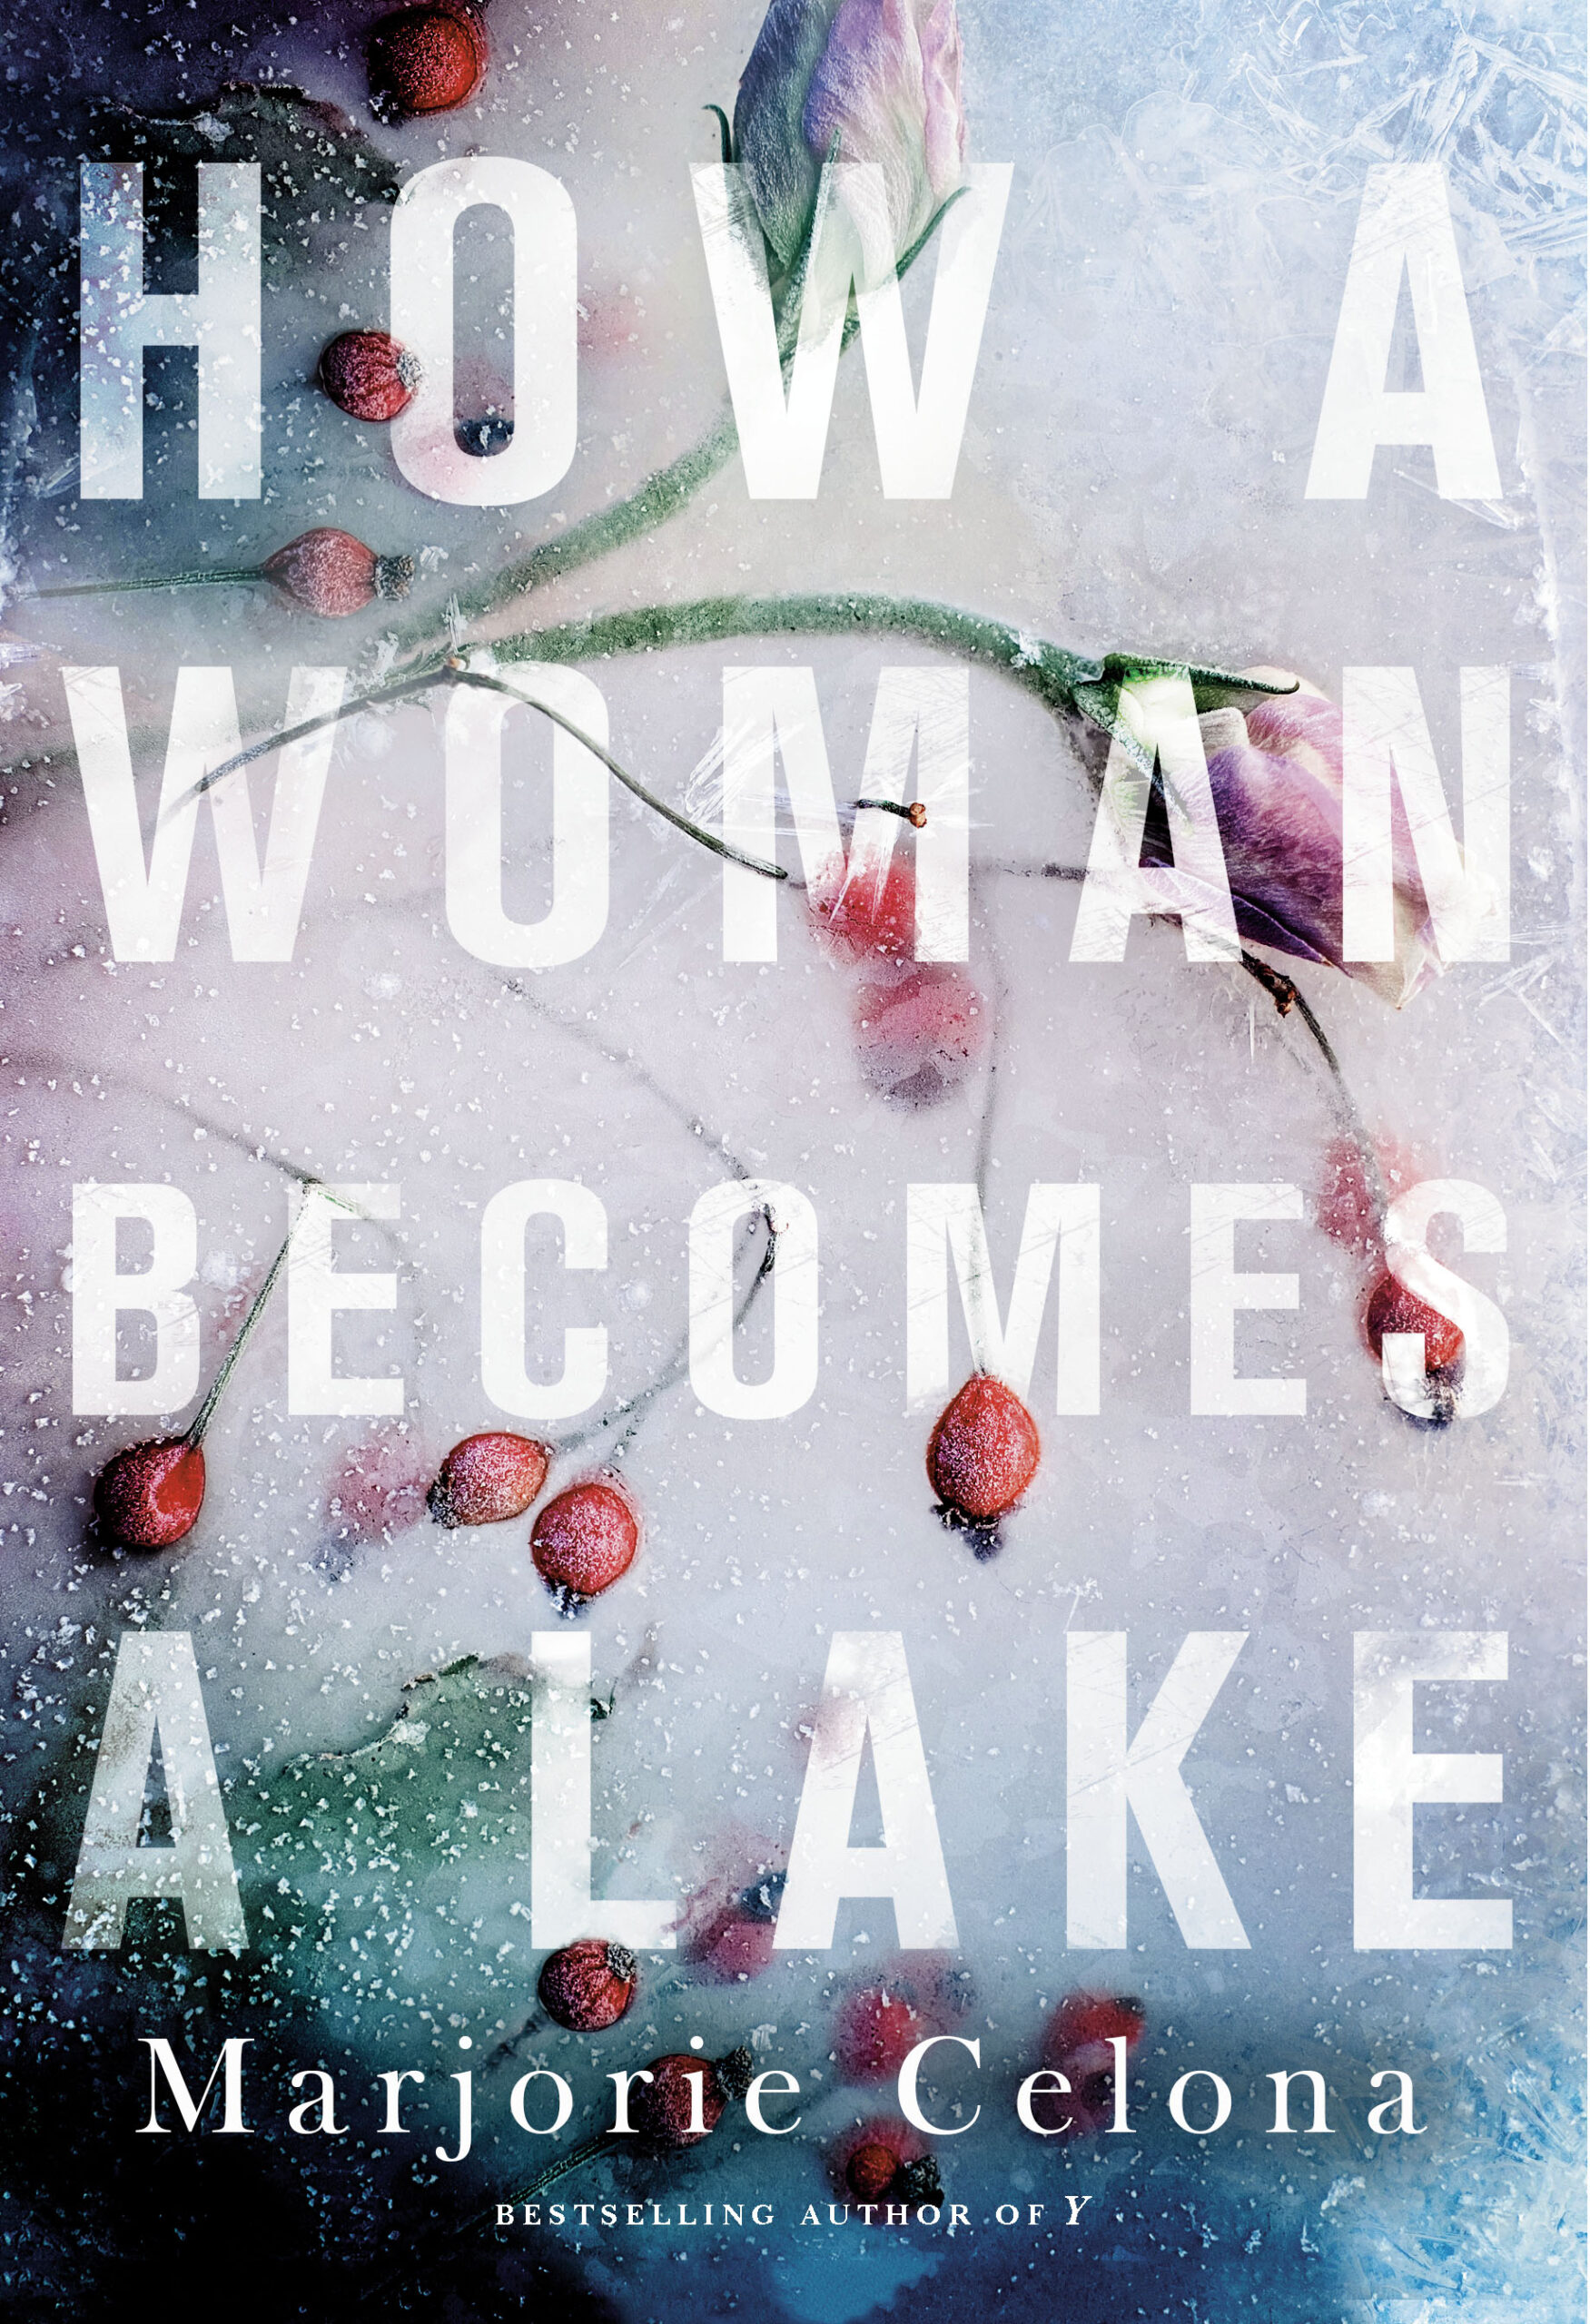 Celona, Marjorie - How a Woman Becomes a Lake